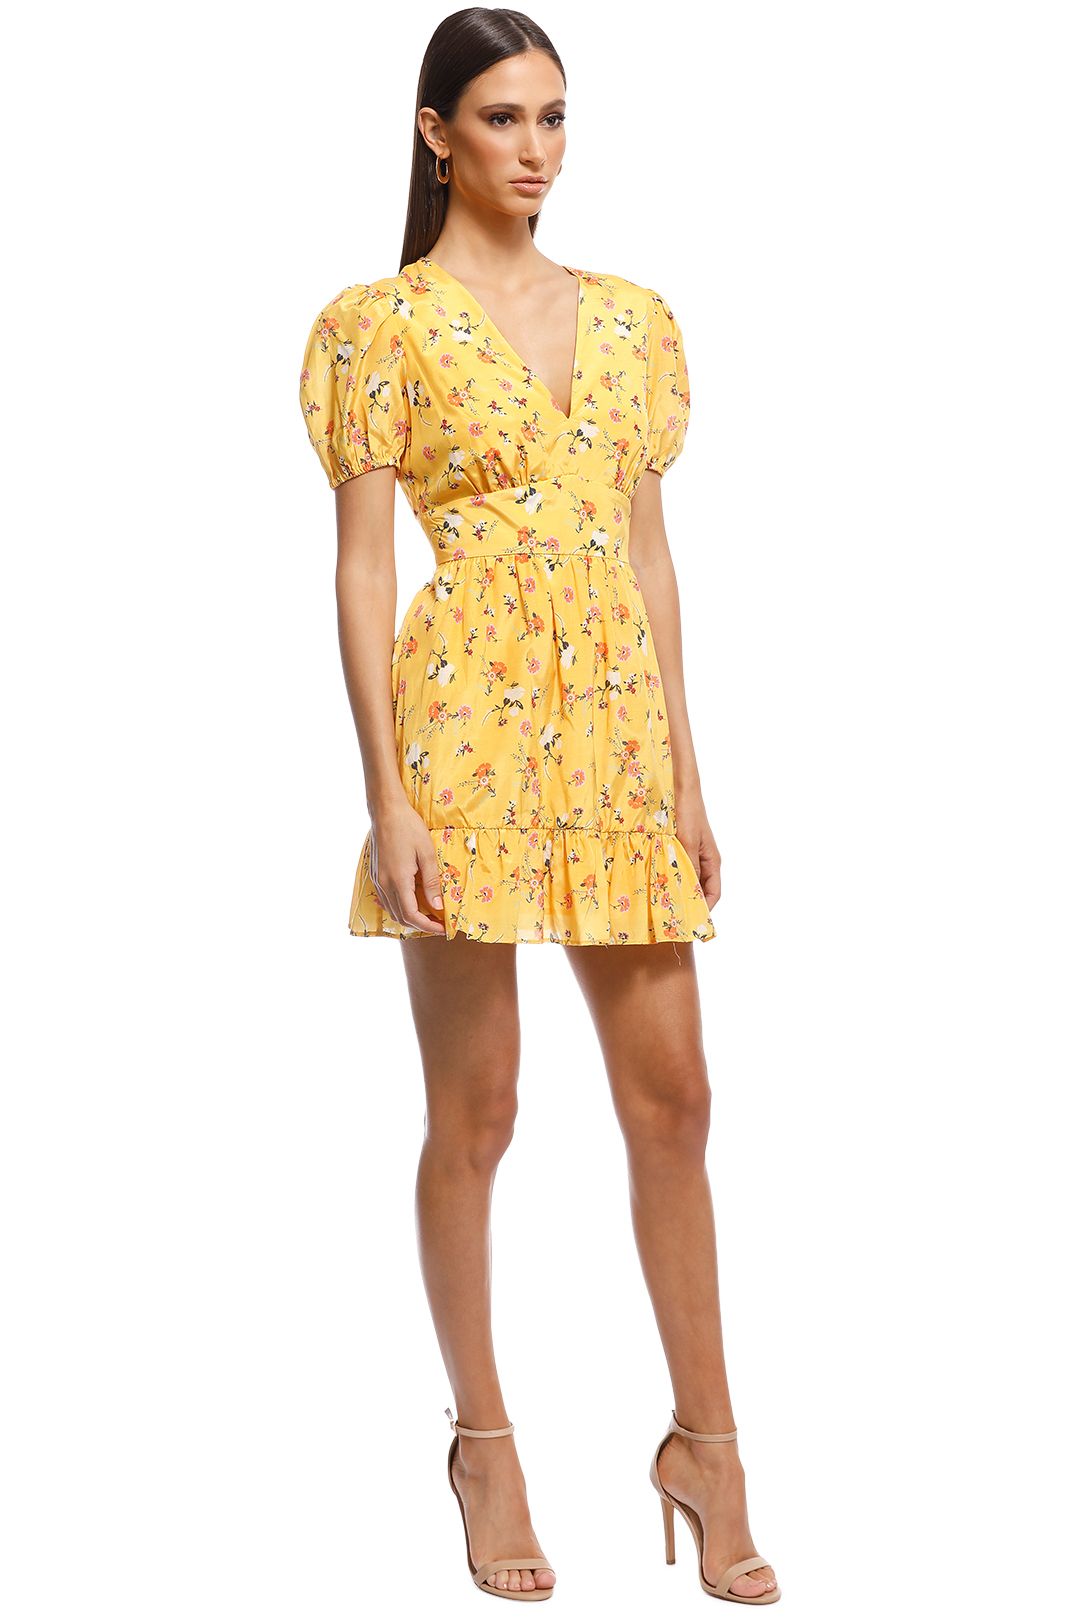 Talulah - Tansy Mini Dress - Yellow - Side